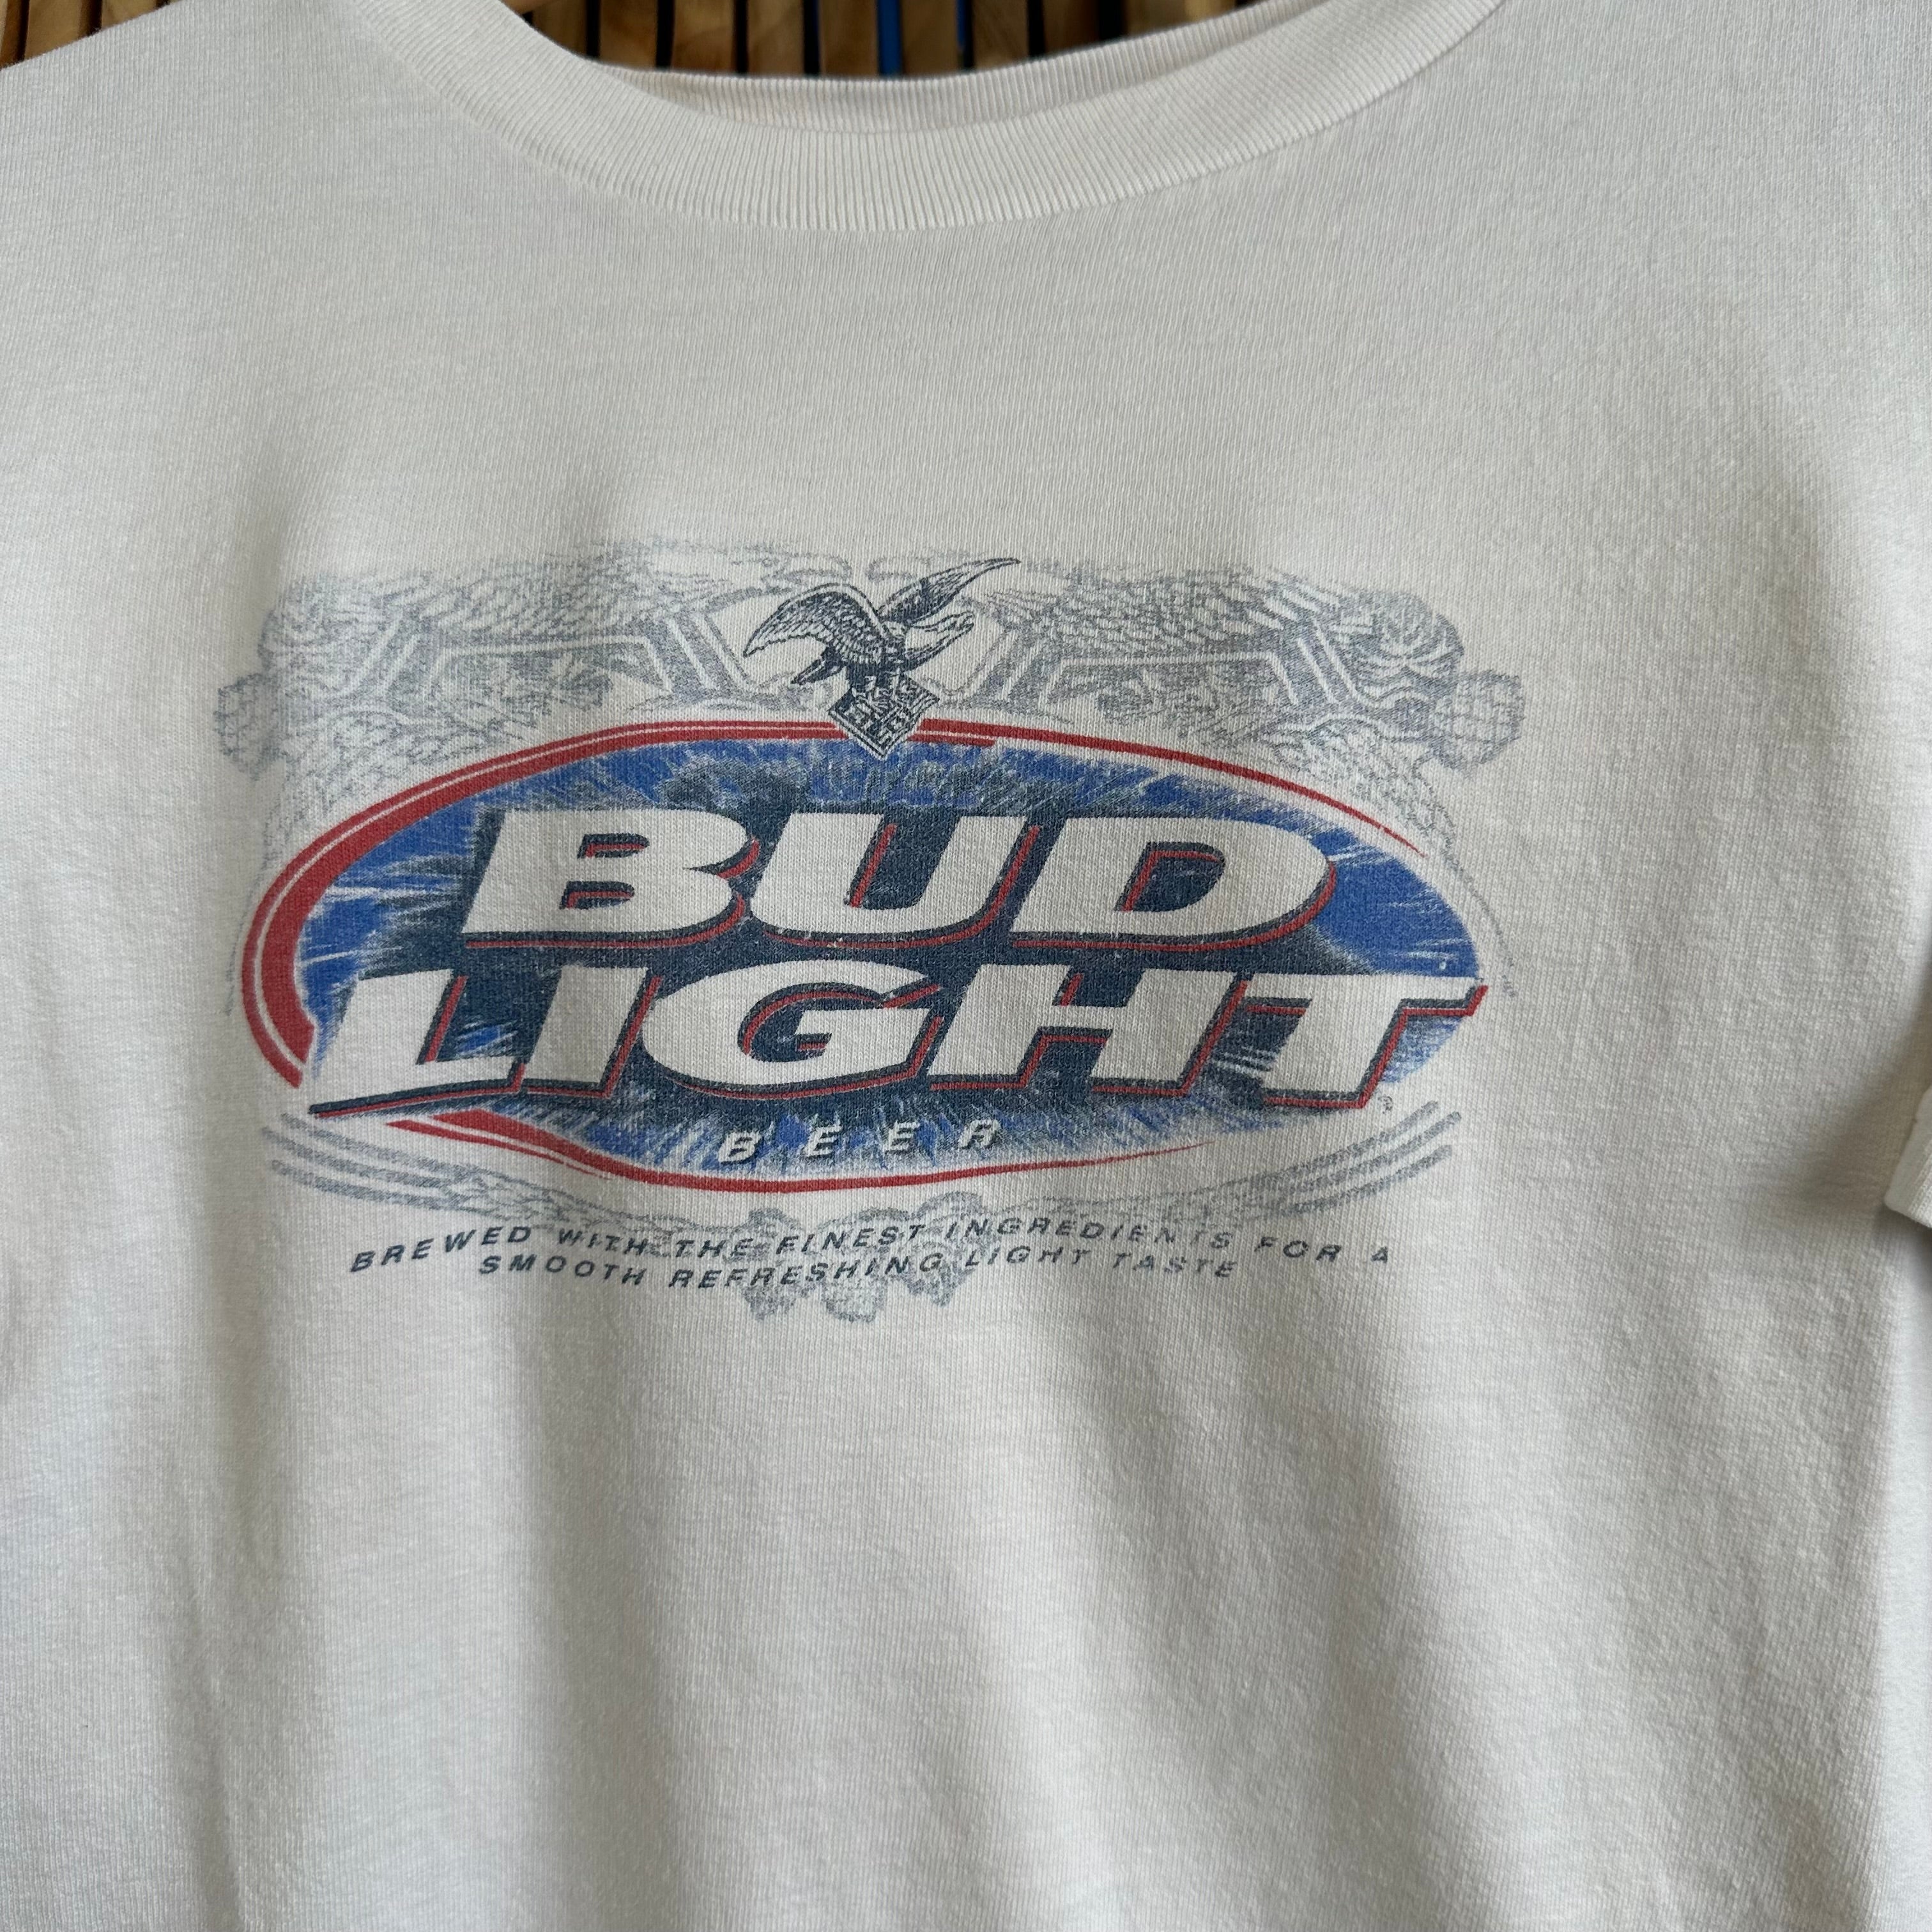 Bud Light Beer T-Shirt